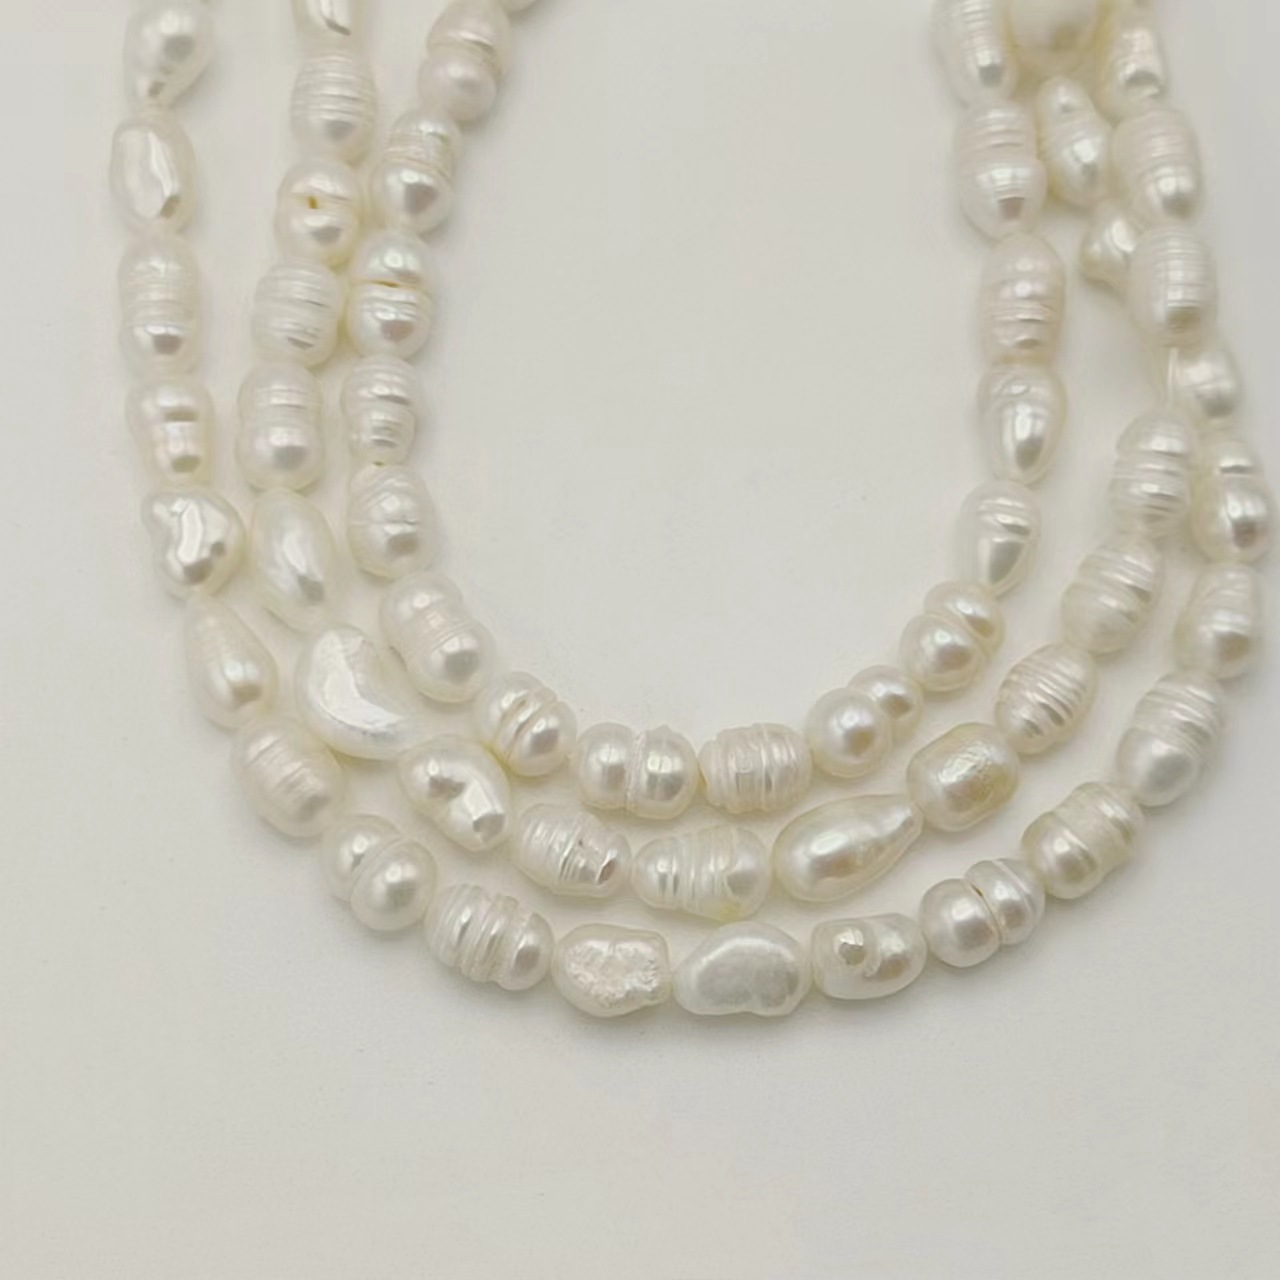 5-6mm shaped beads